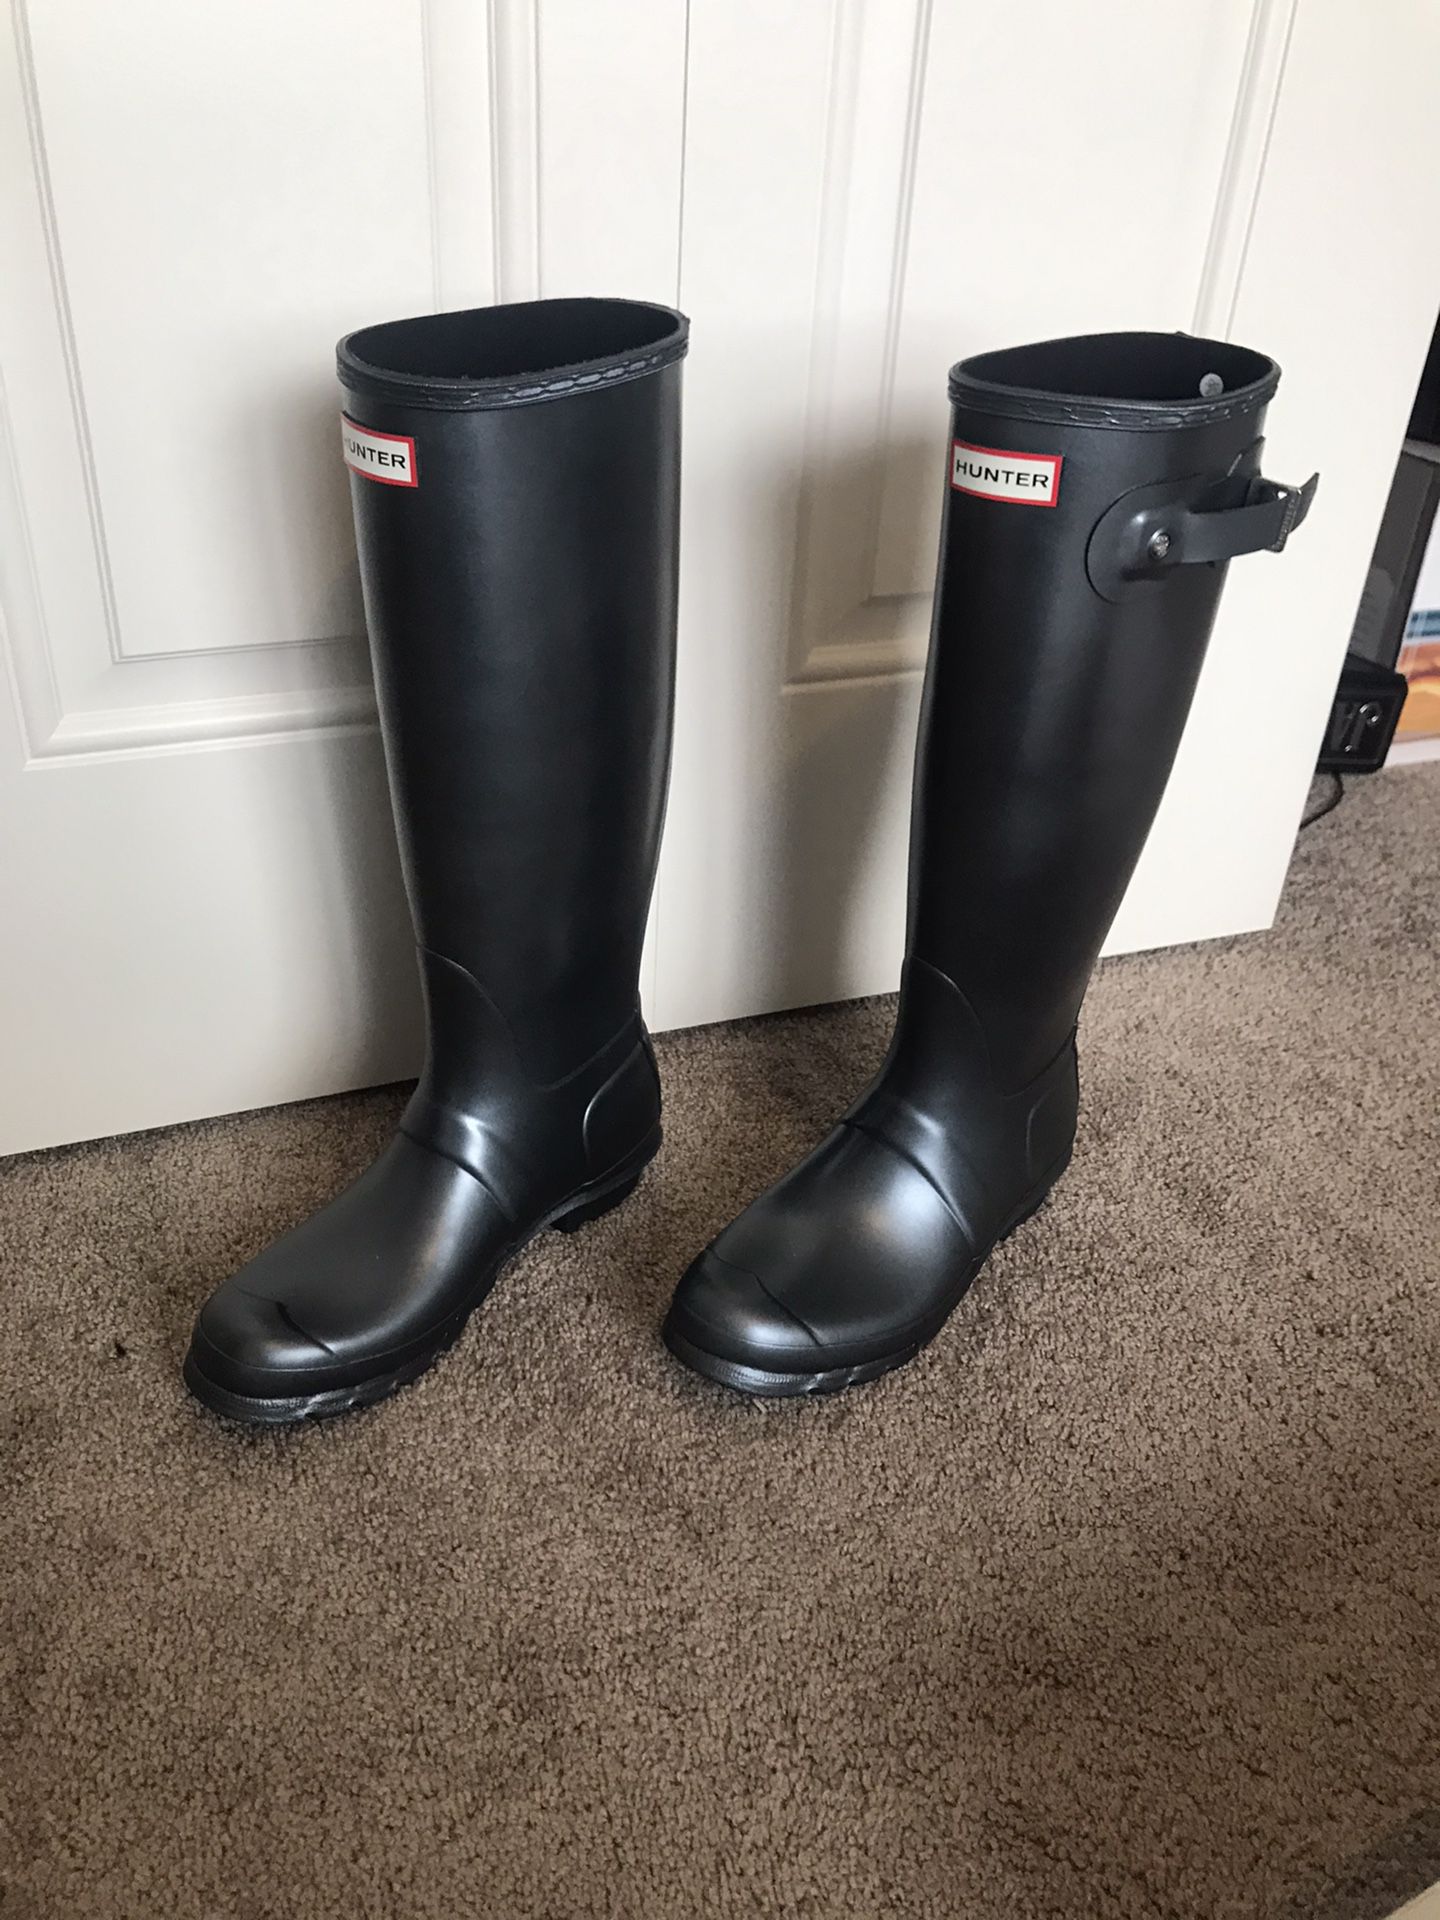 Hunter rain boots. Size 9. Brand new in box